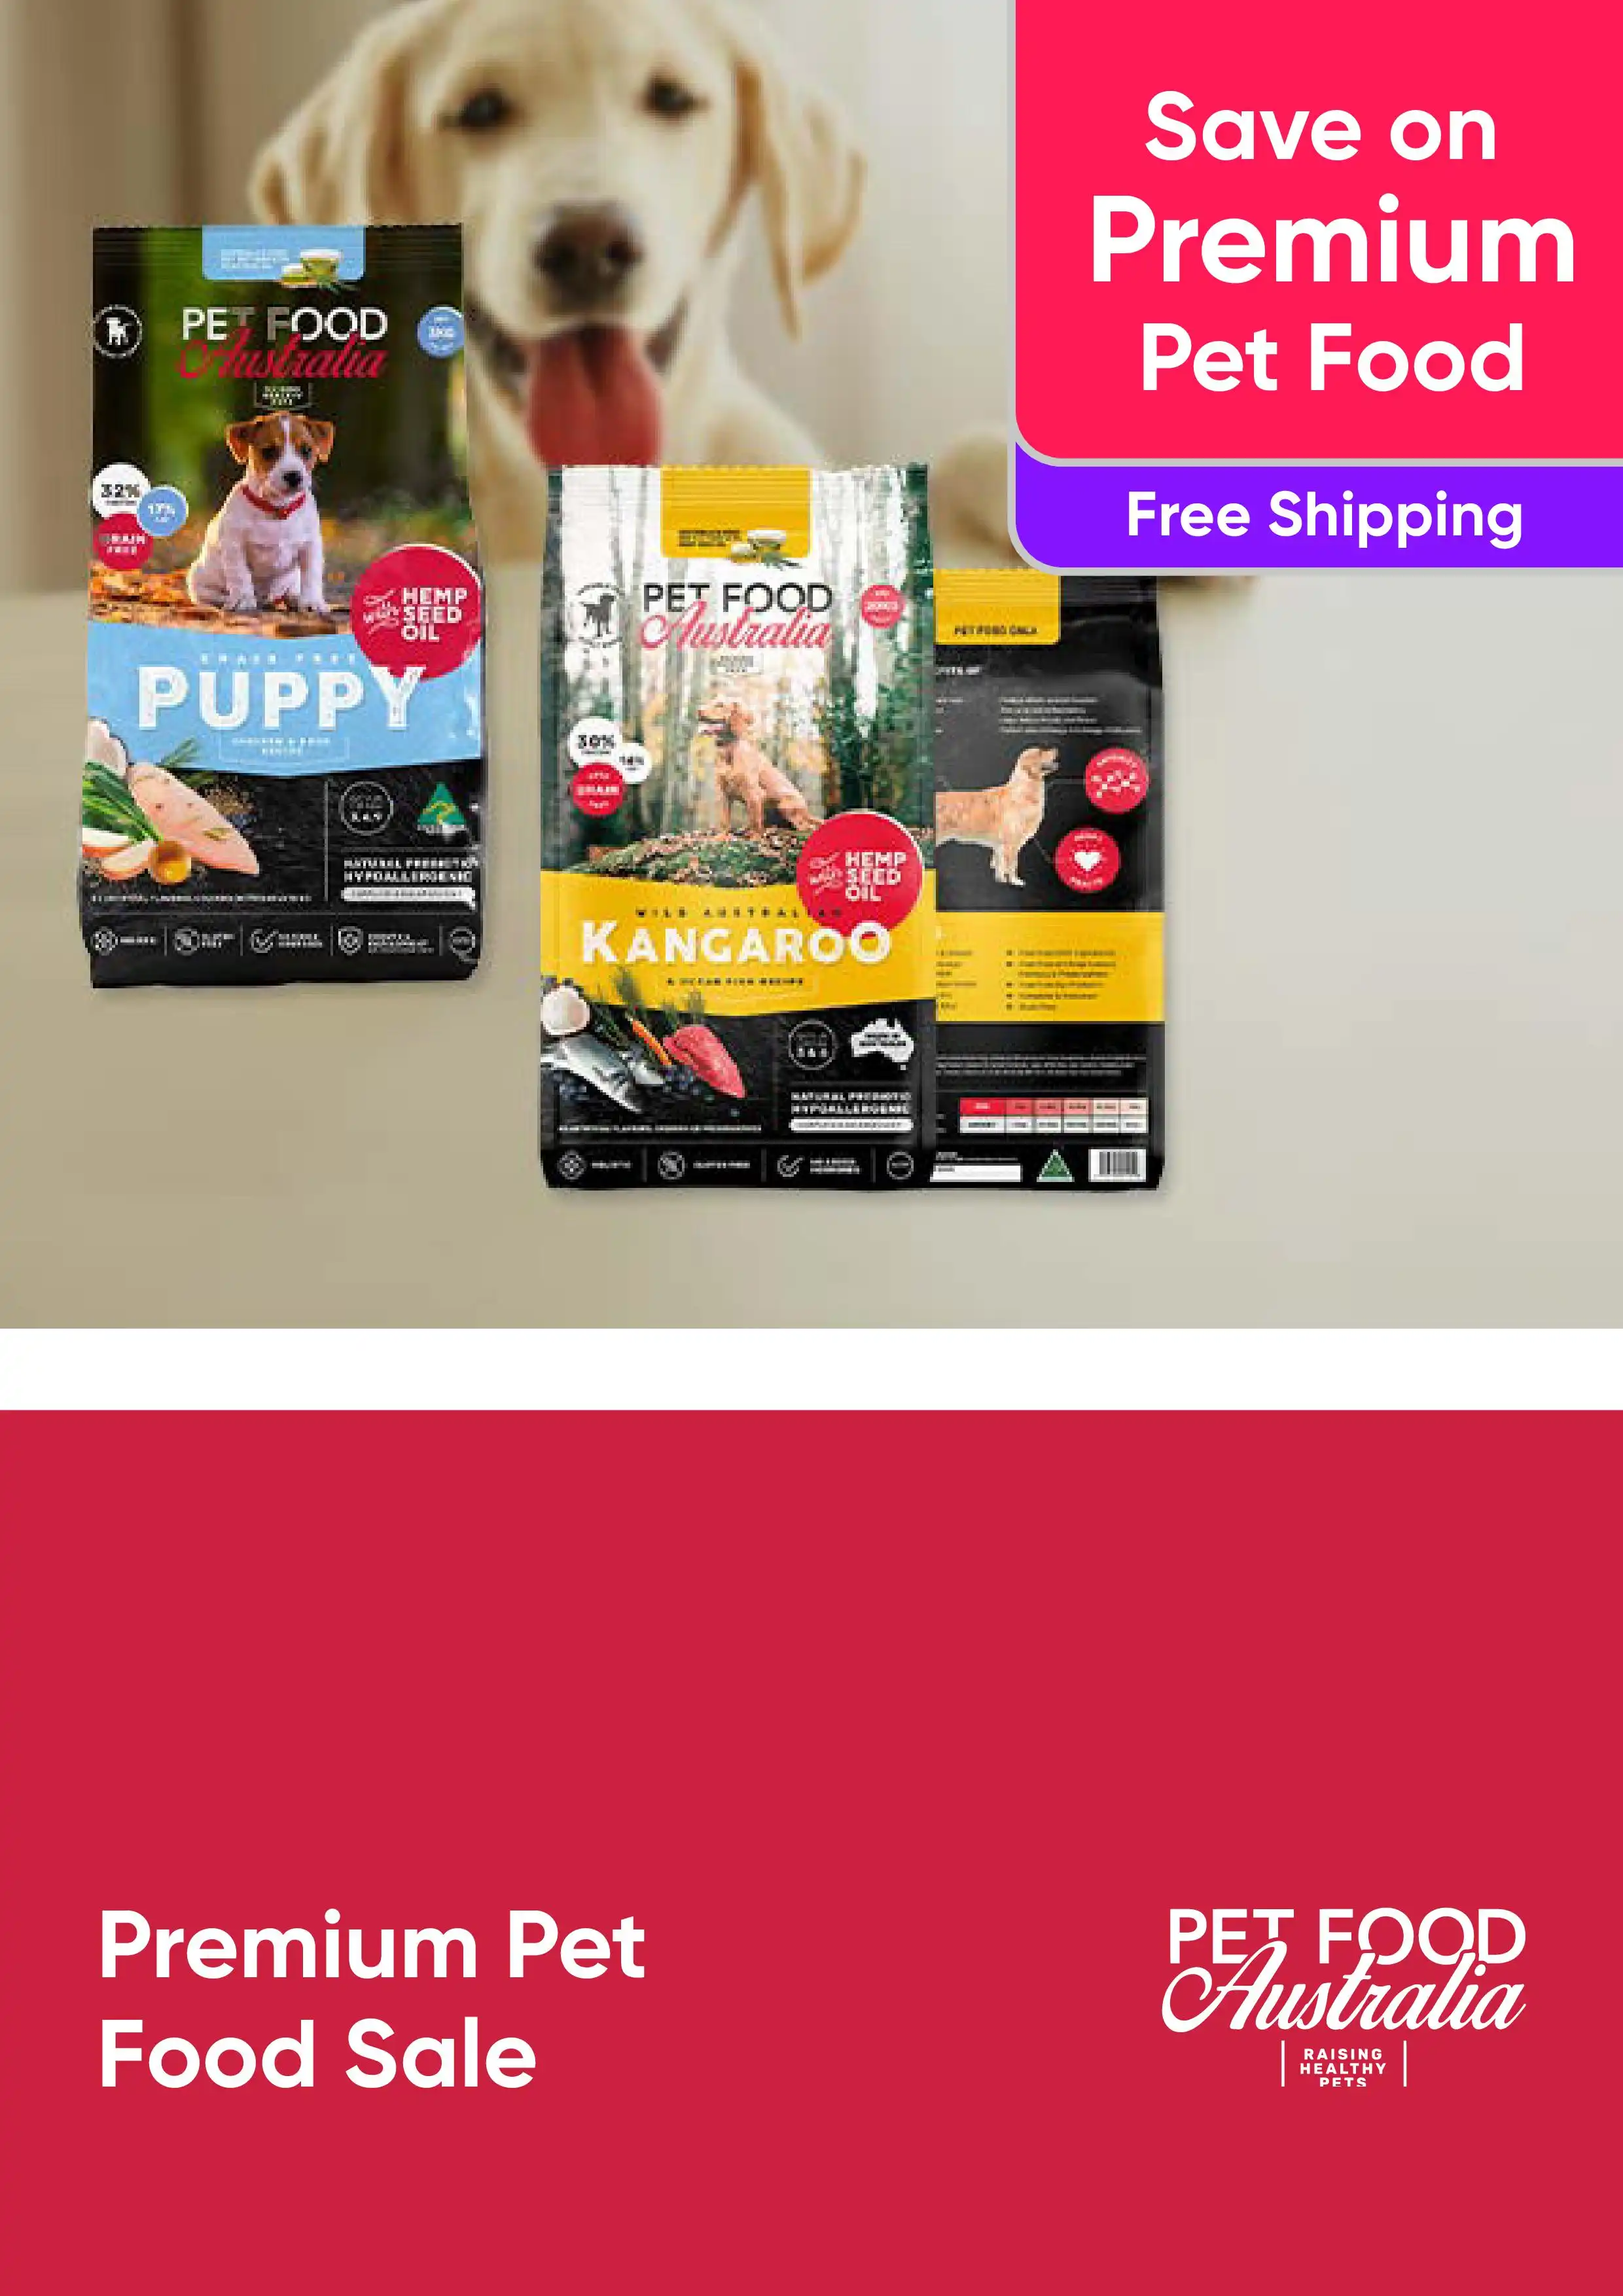 Premium Pet Food Sale - Free Shipping Nationwide